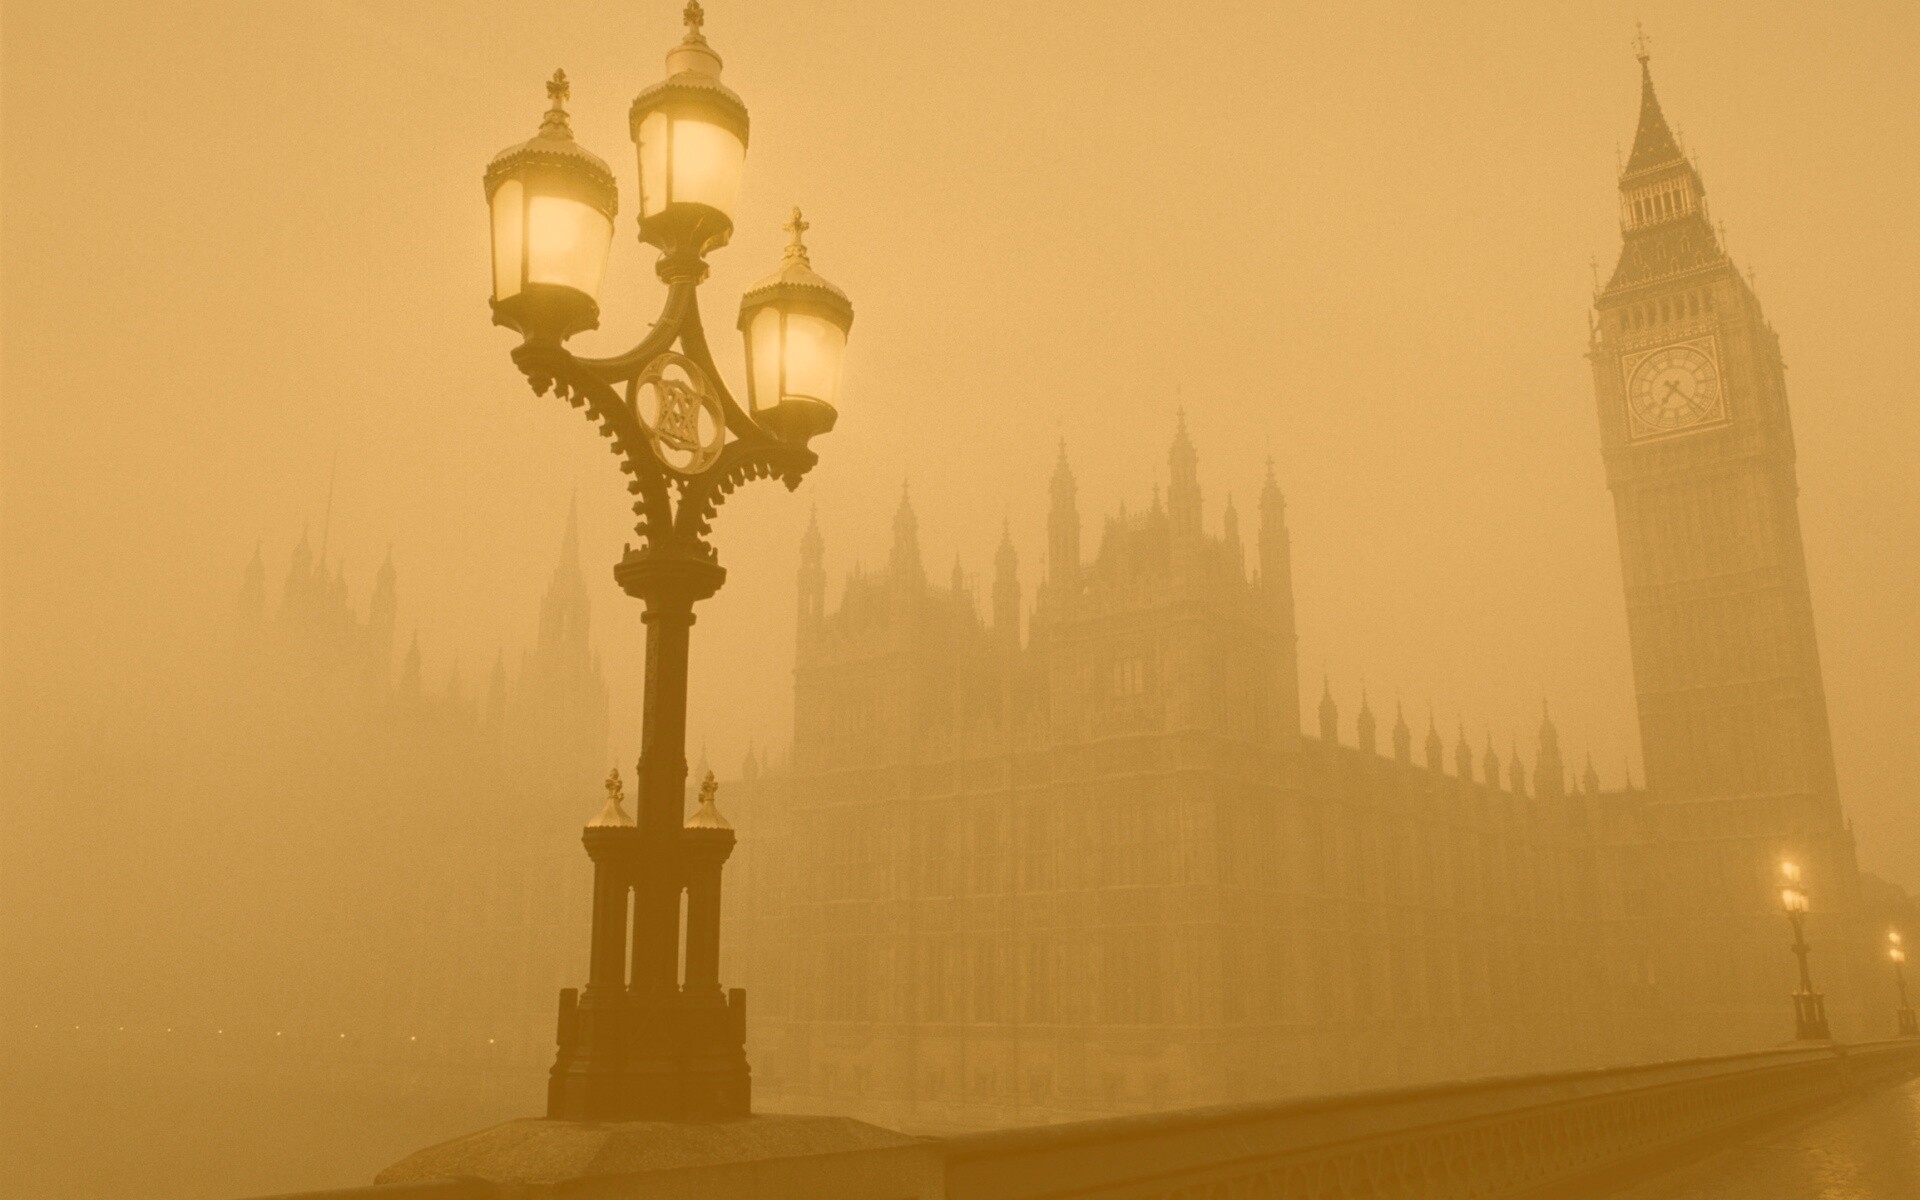 Просто лондон. Лондон туман Биг Бен. Лондонский туман. Обои на рабочий стол Лондон. Туманный Лондон фон.